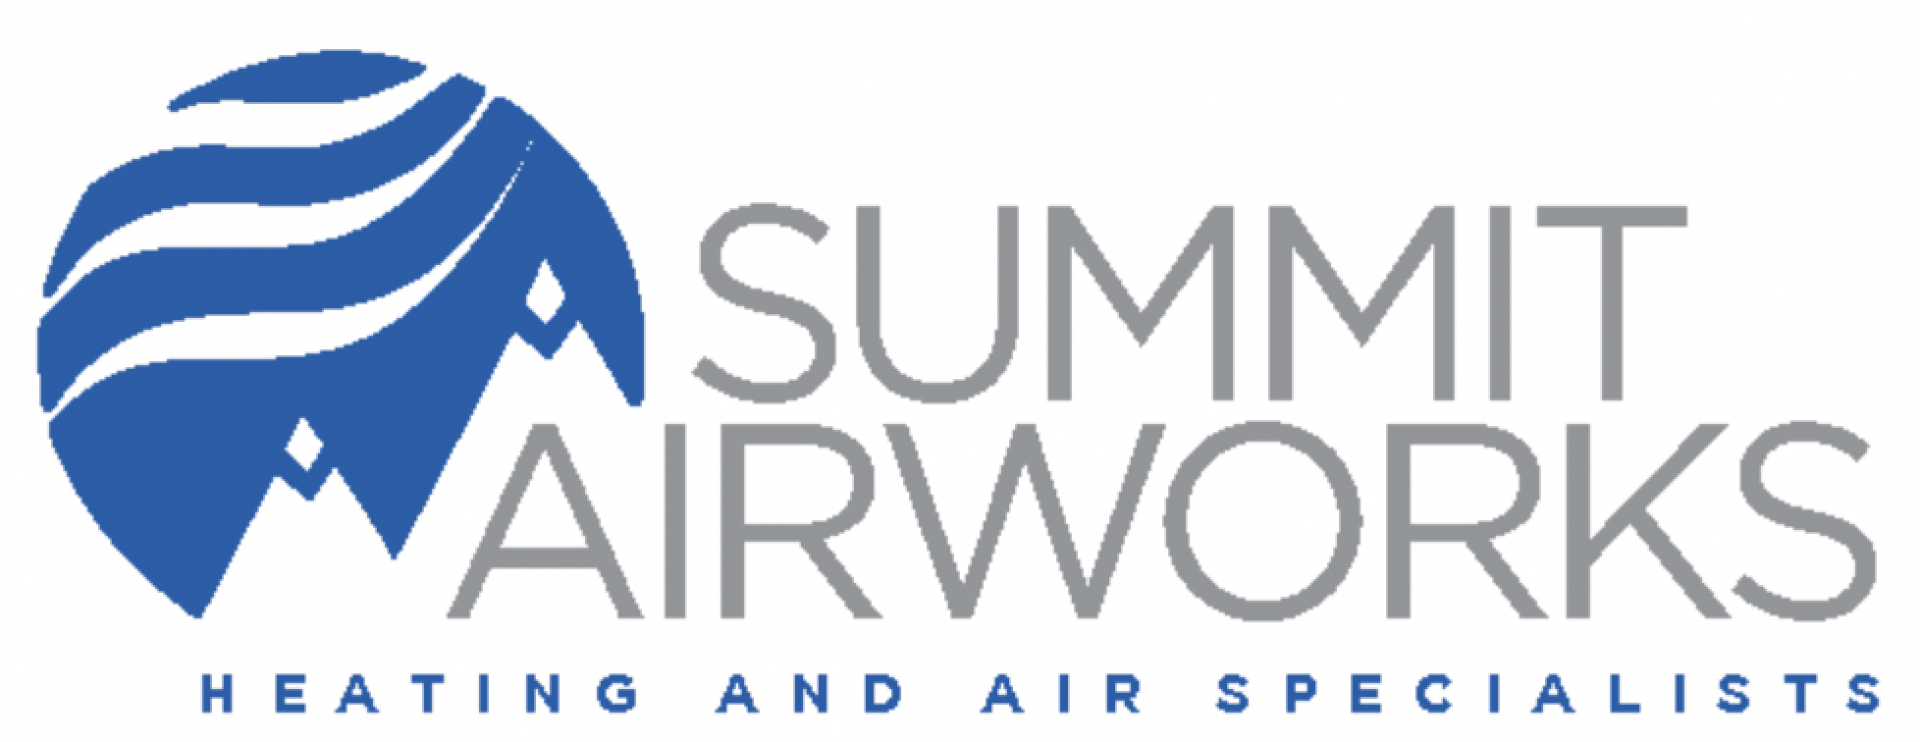 Summit Airworks company logo